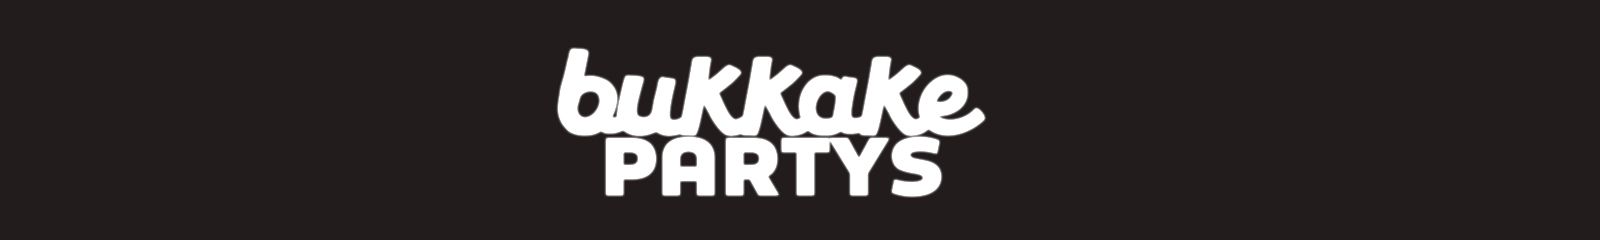 Bukkake Partys